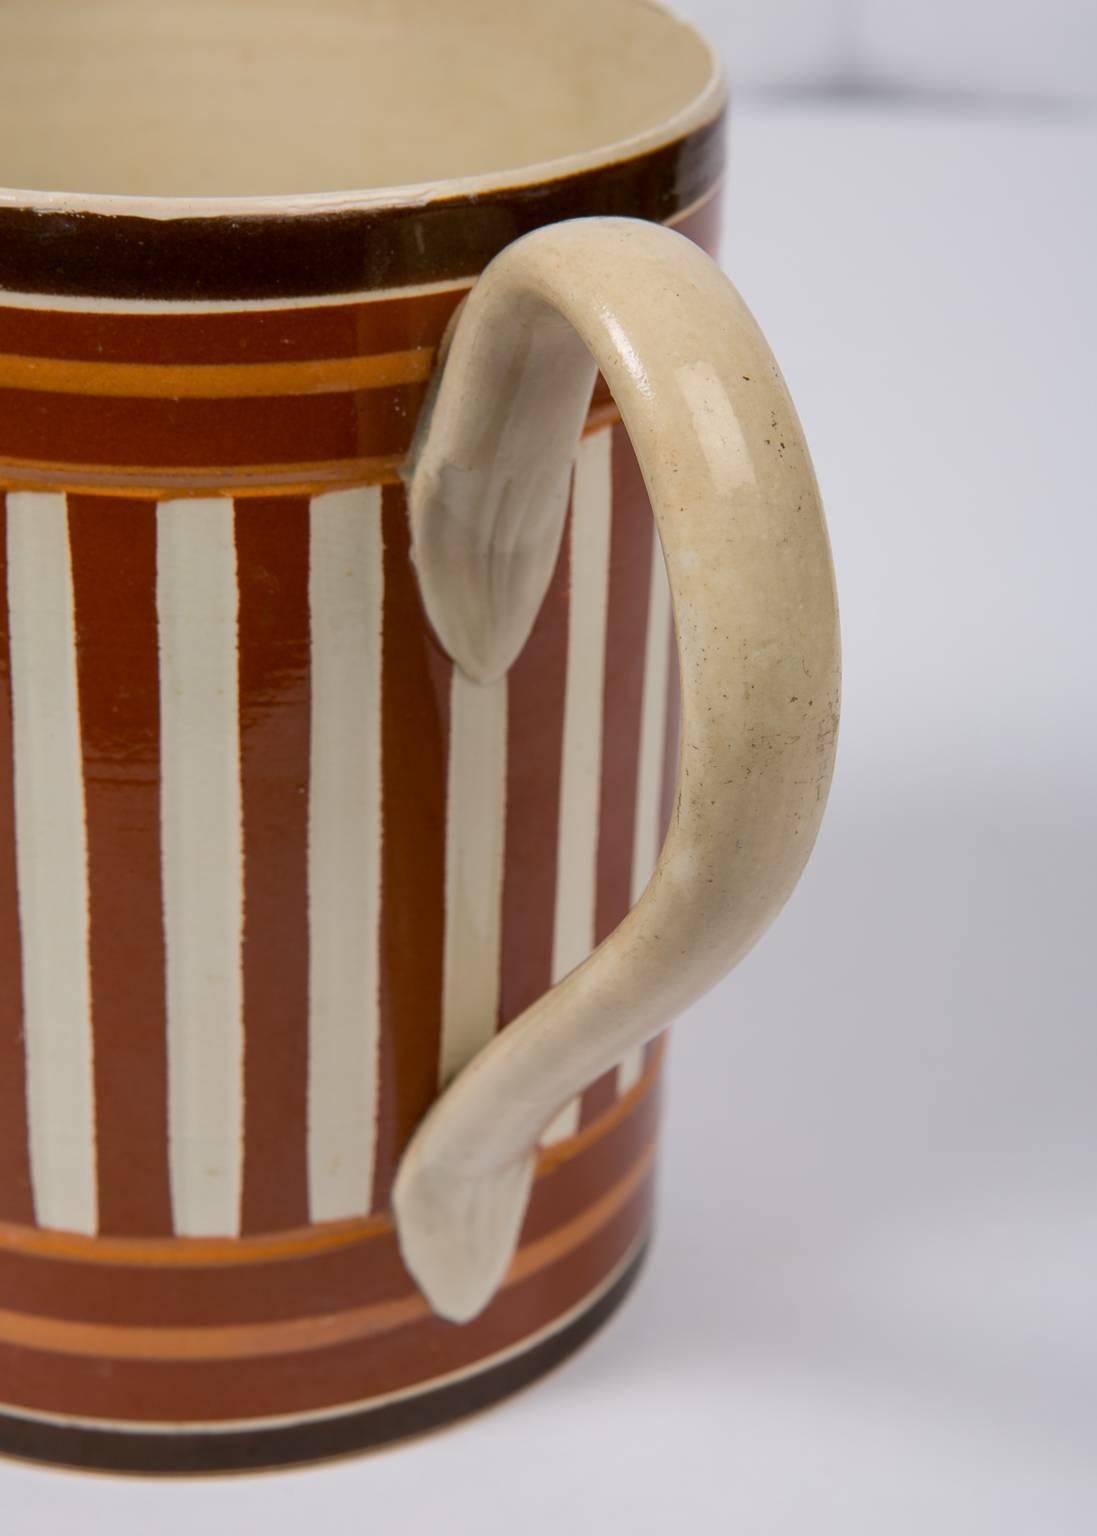 19th Century Antique Creamware Mochaware Mug with Stripes